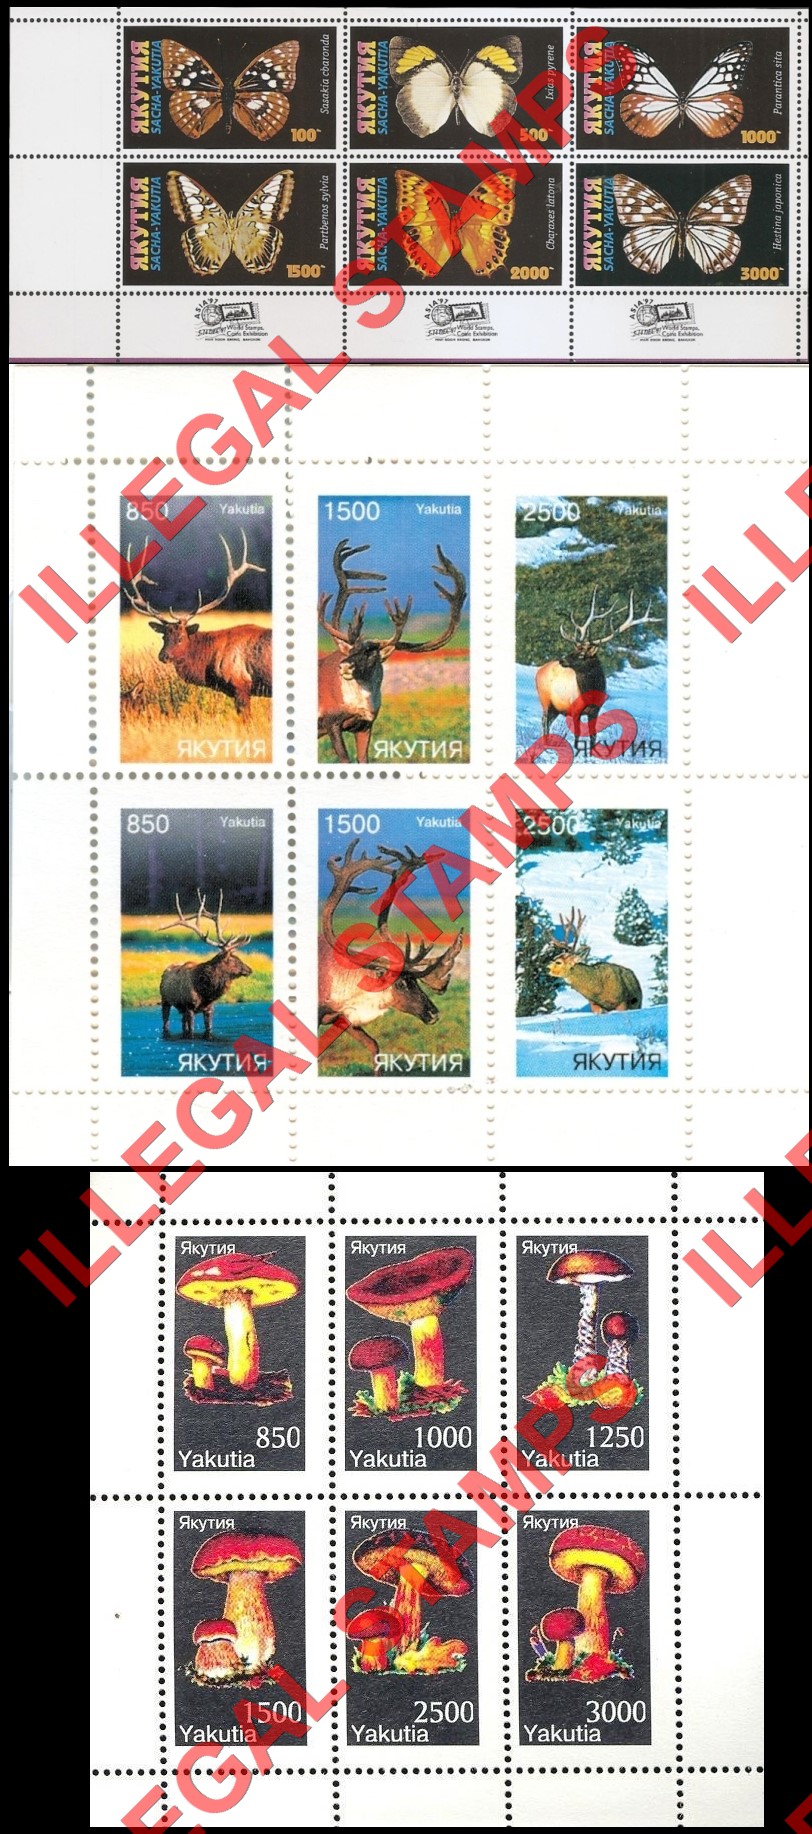 Republic of Sakha Yakutia 1997 Counterfeit Illegal Stamps (Part 3)